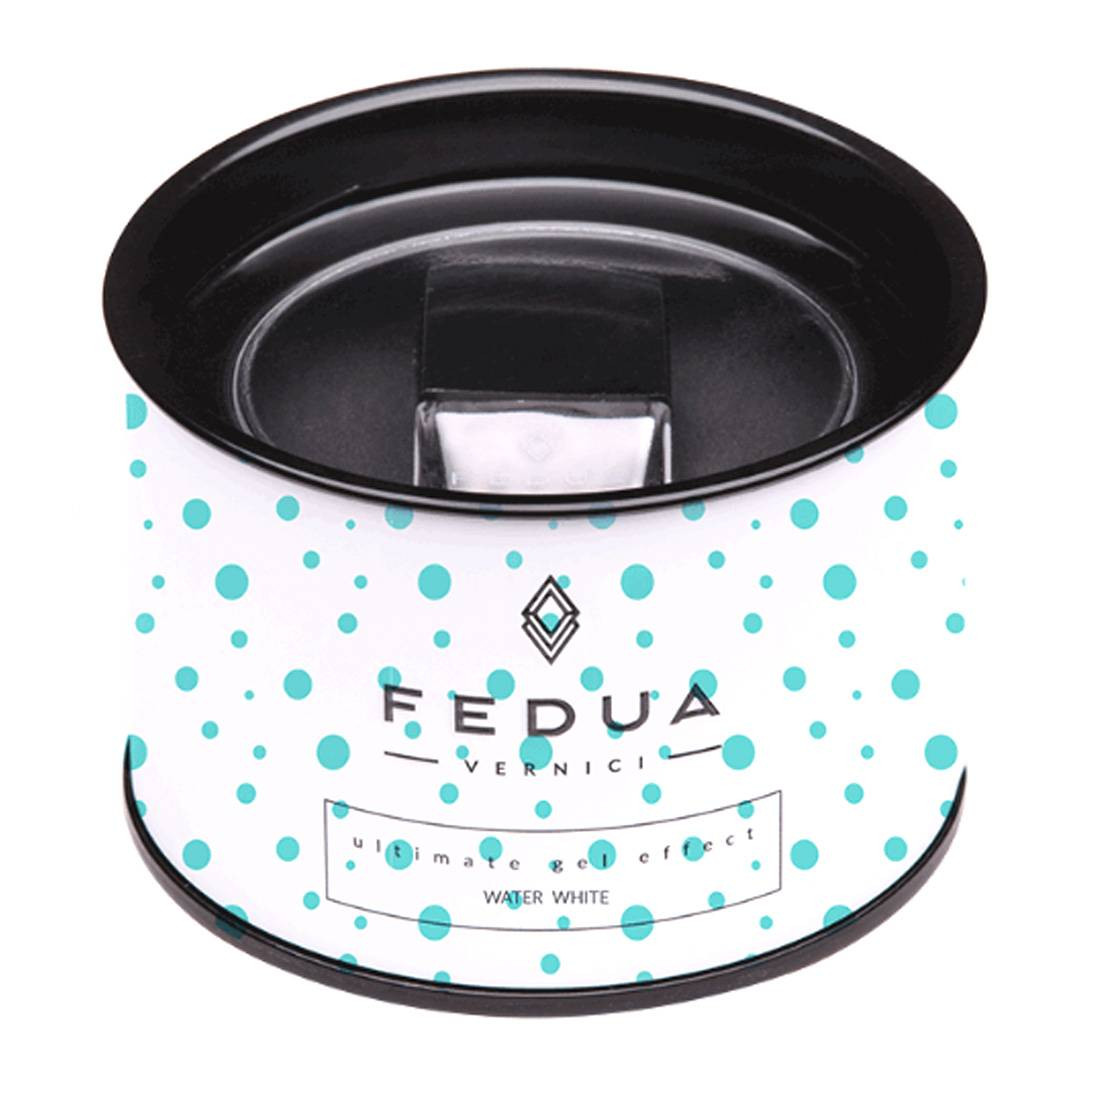 Fedua Vernici Ultimate Collection Water White - Лак для нігтів Прозоро-білий